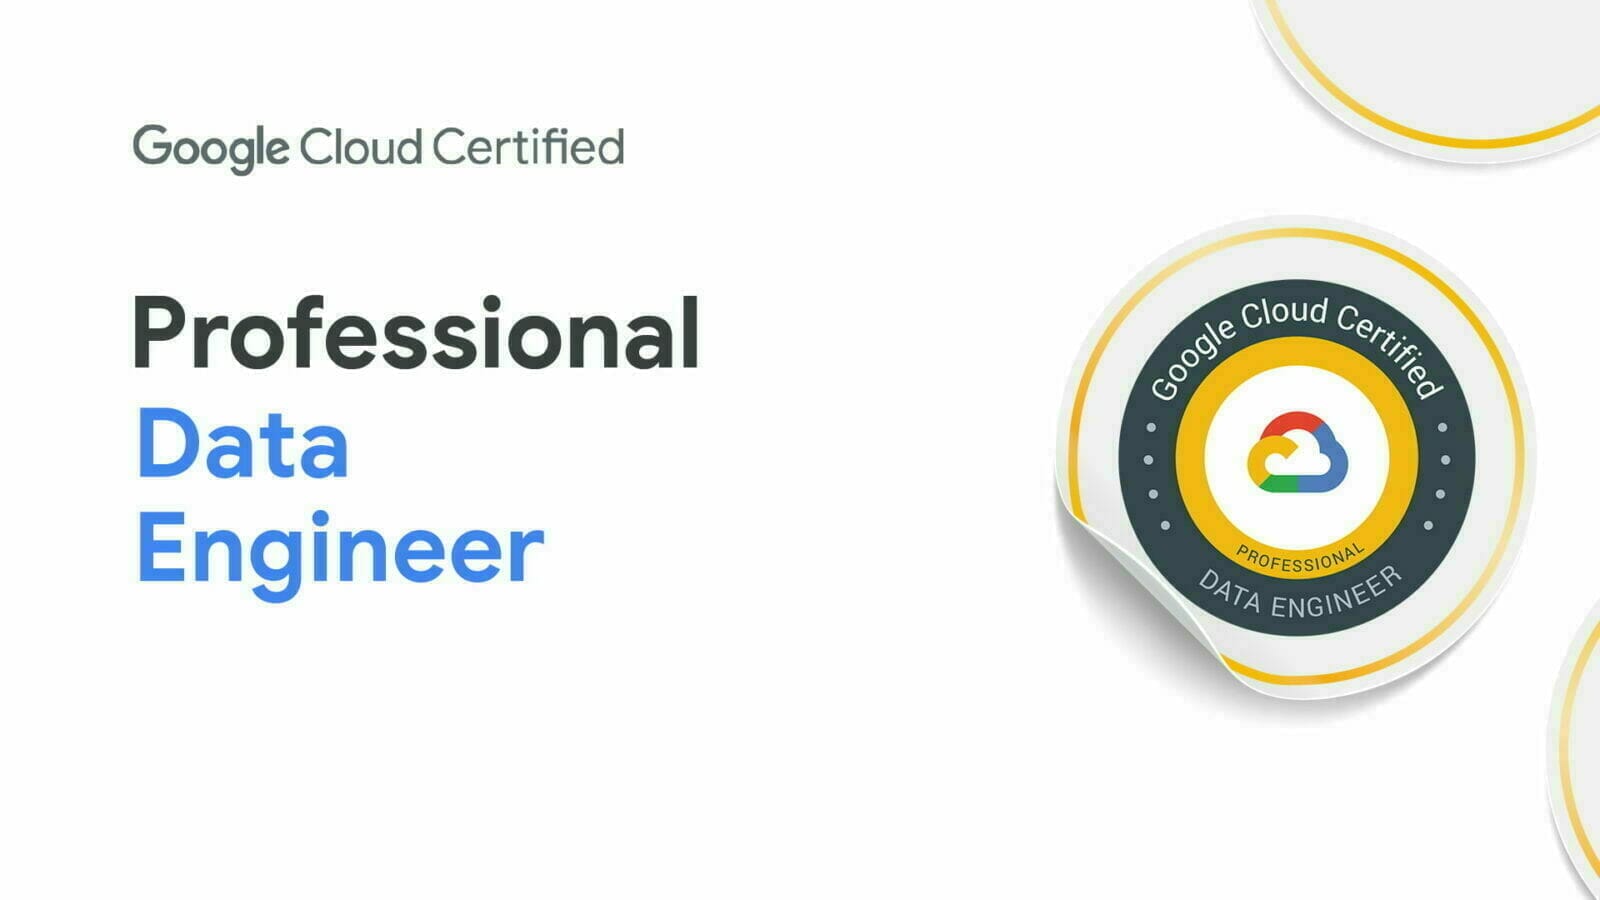 Google Cloud Certified - Professional Data Engineer 認定資格バッジ